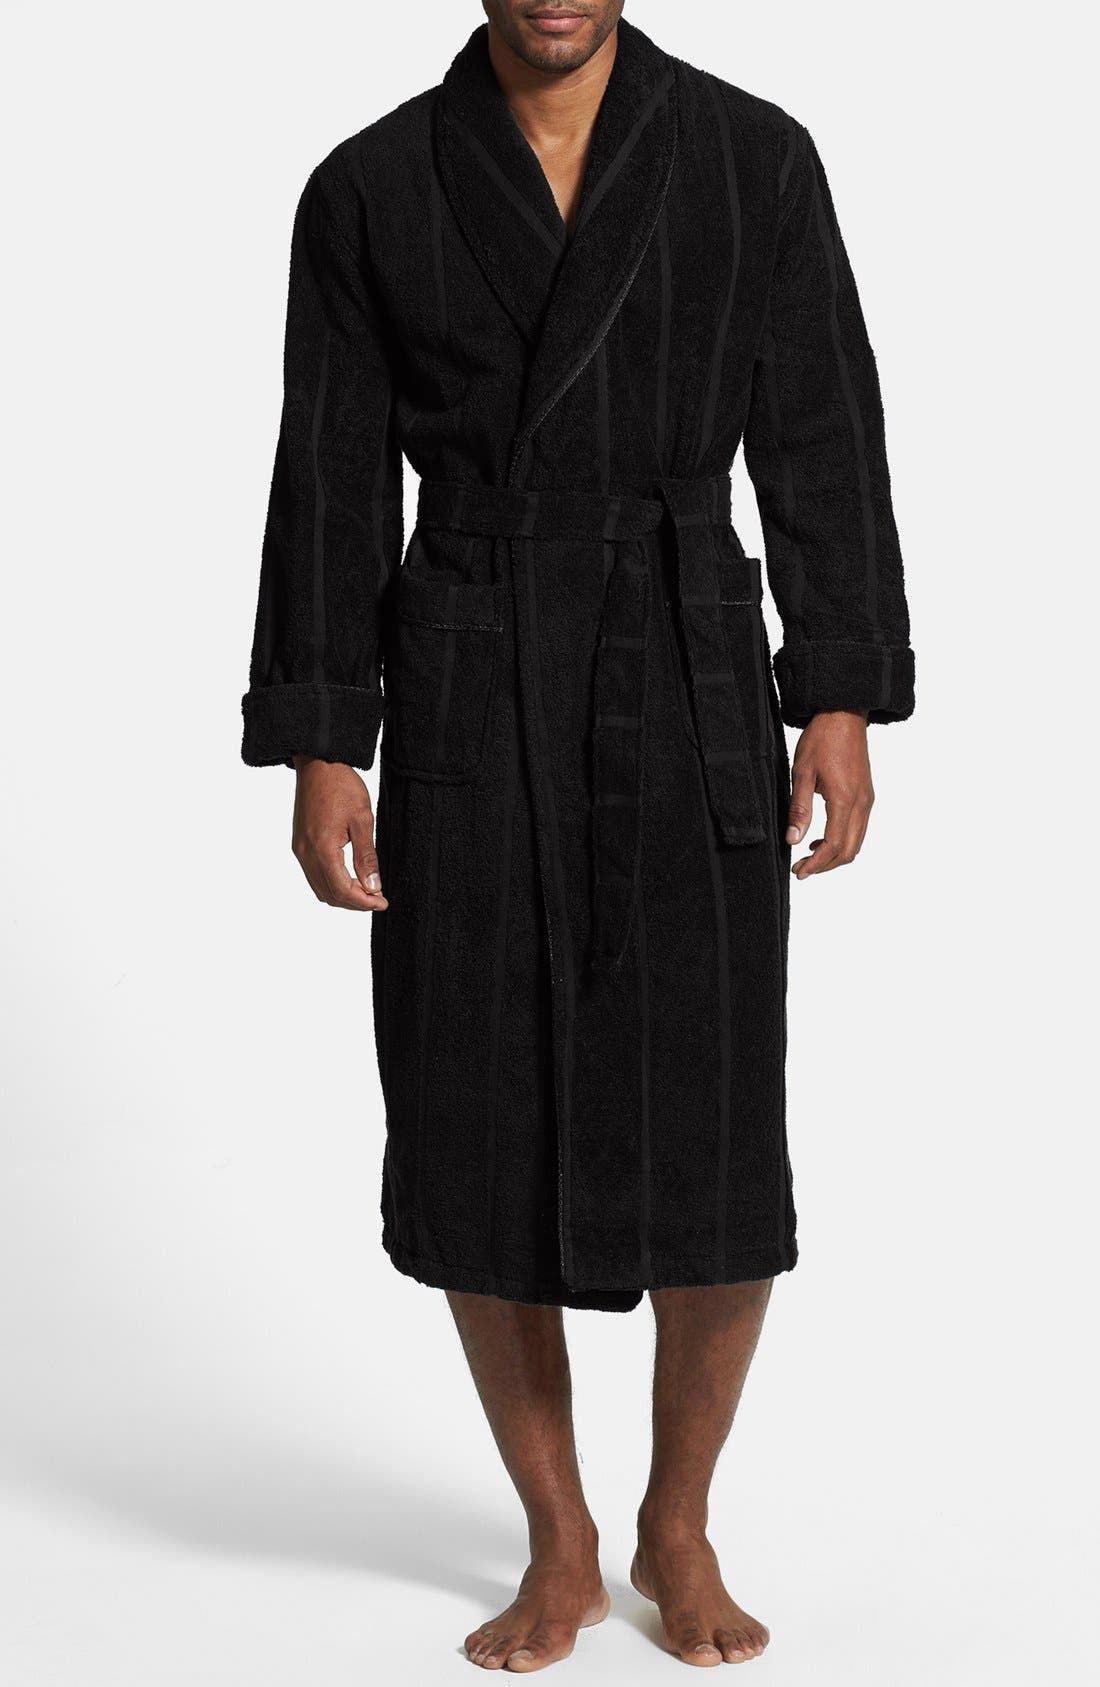 Catkoo Mens Bathrobe,Fashion Dragon Printed Pockets Long Sleeve Men Bathrobe Sleepwear Nightgown Robe 